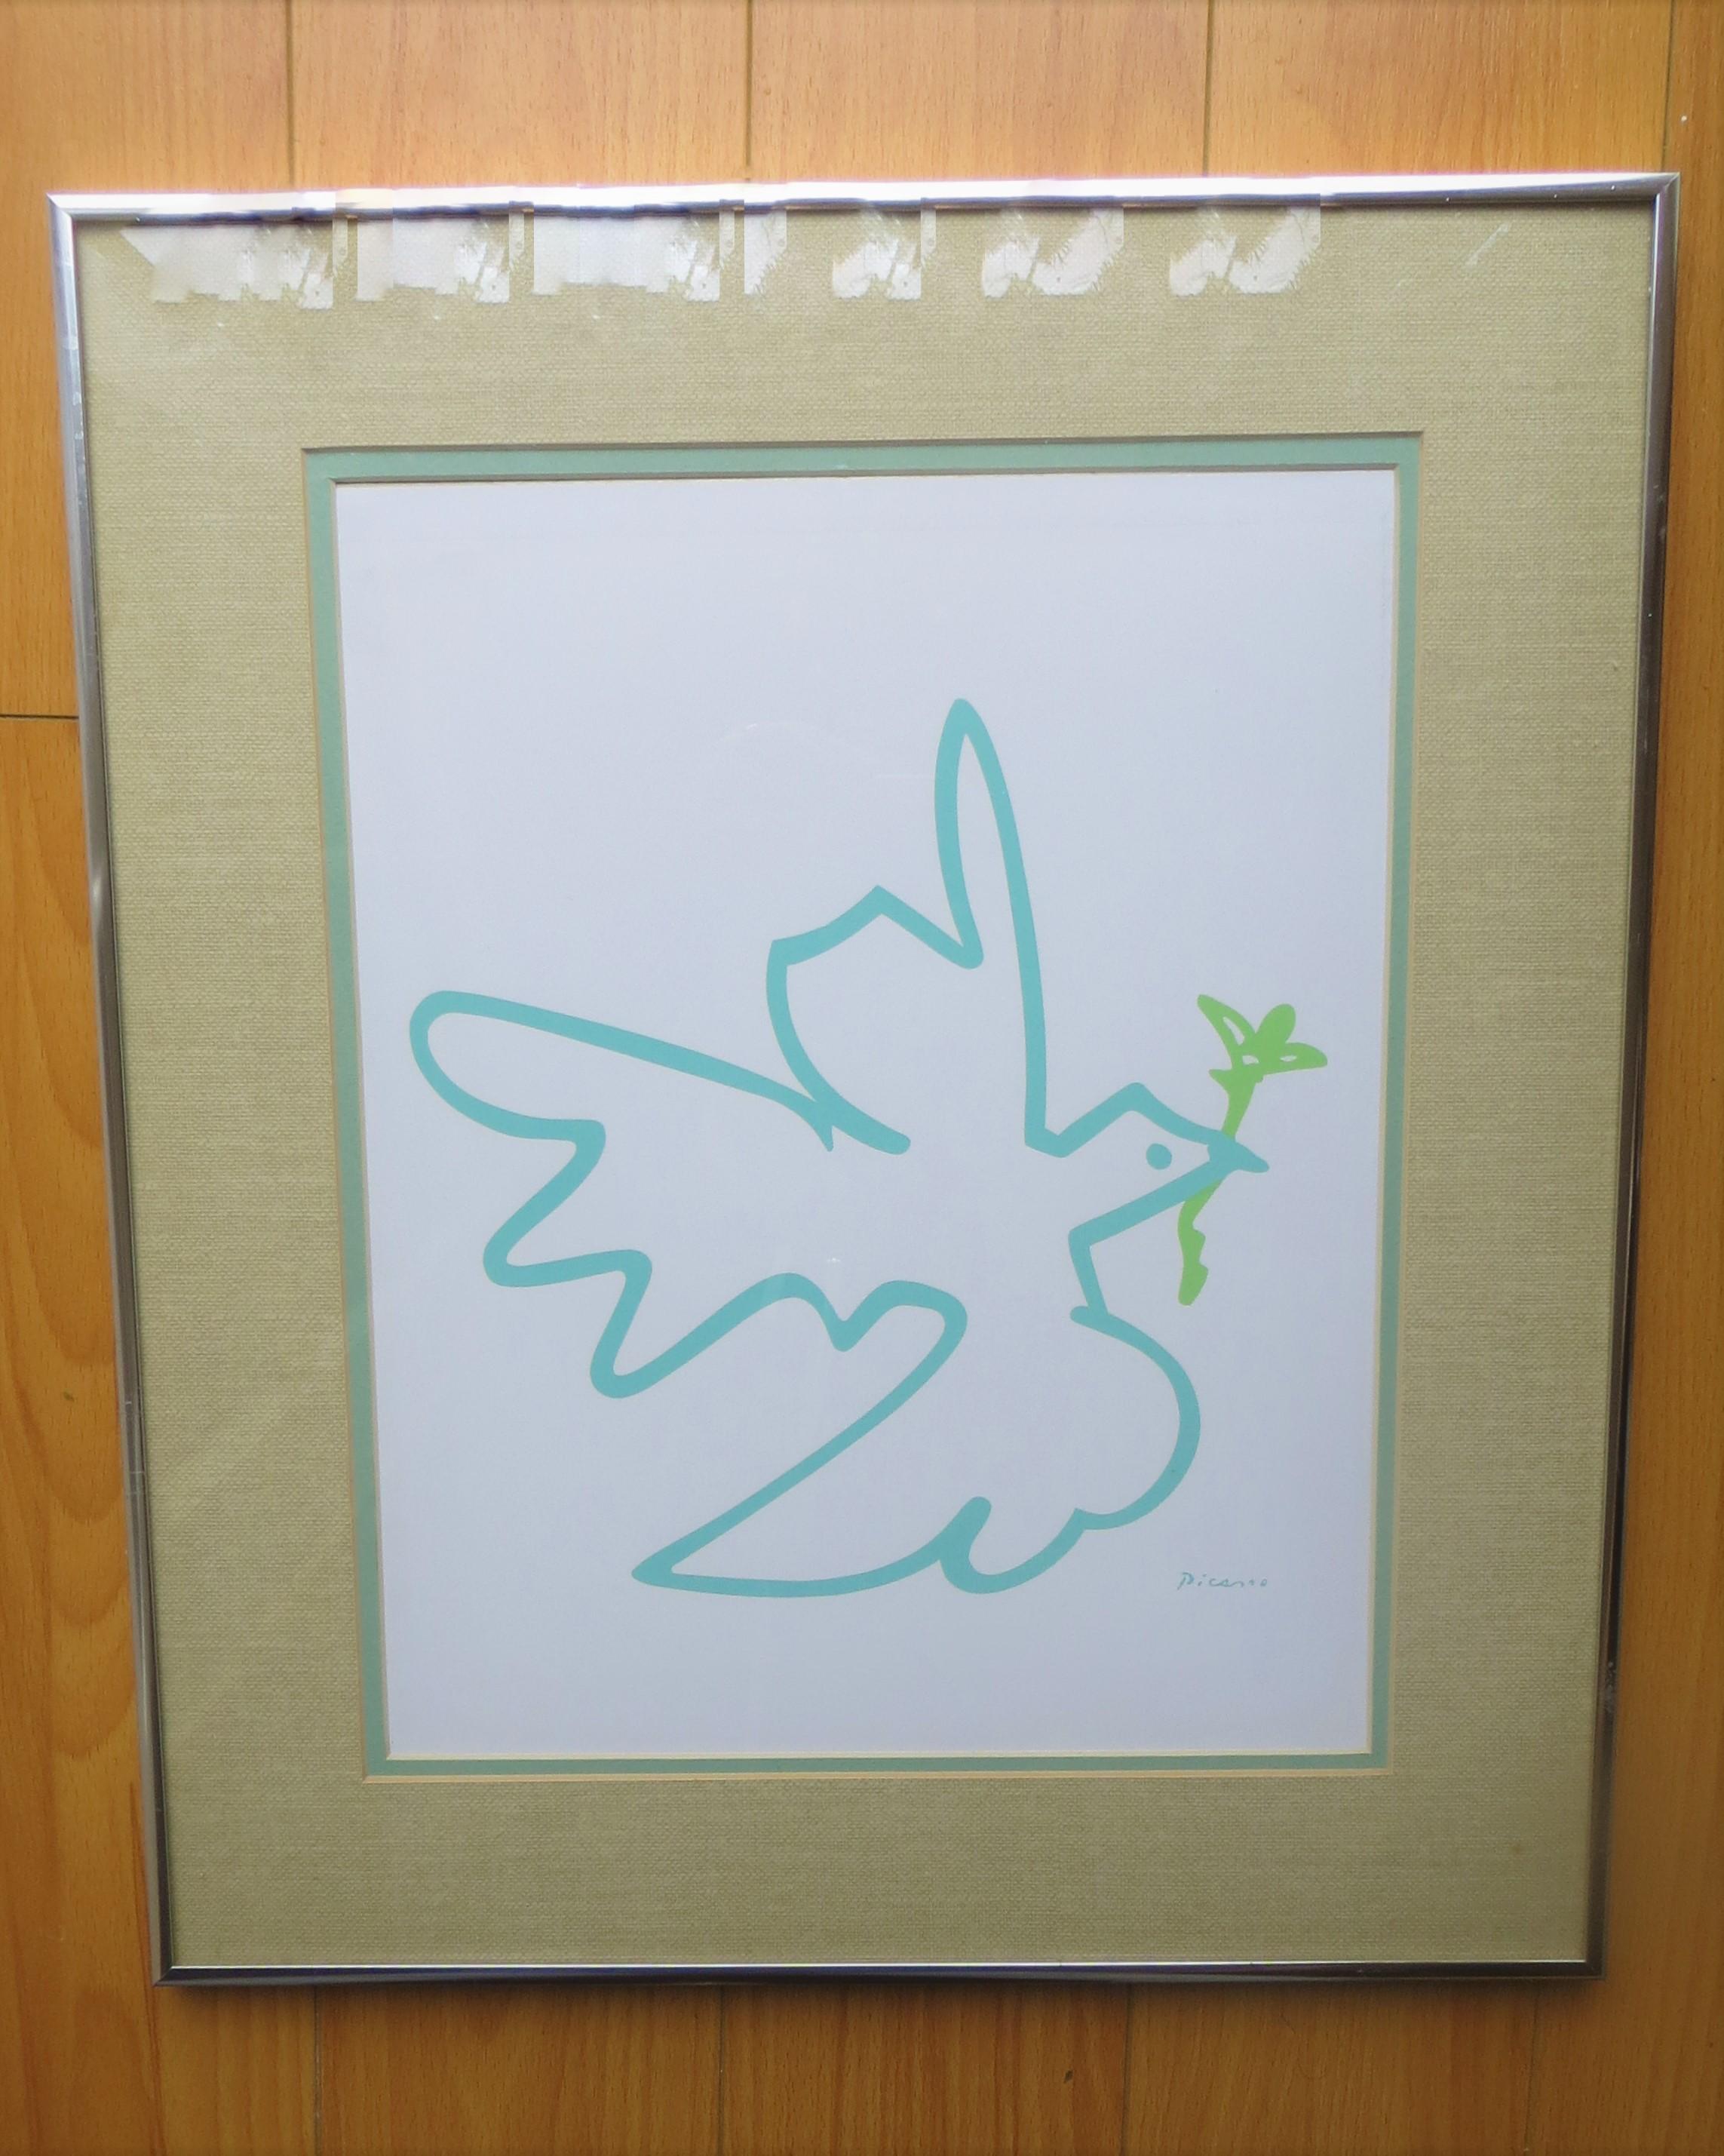  After Pablo Picasso - Peace Dove 1 - Lithograph 1